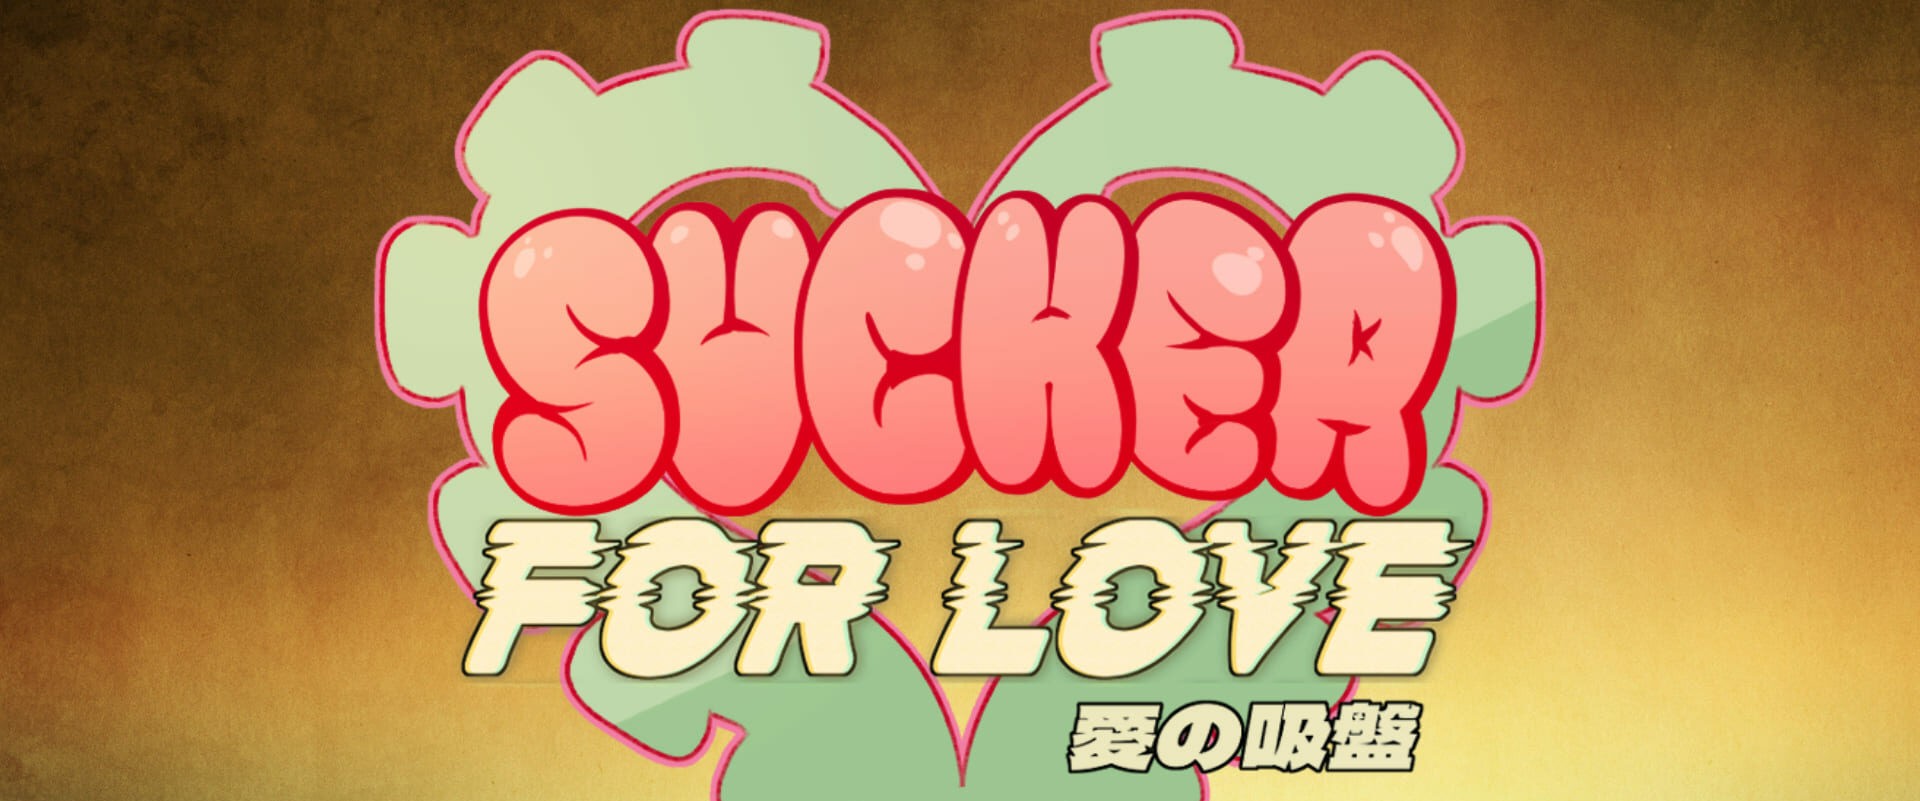 Sucker for Love : First Date